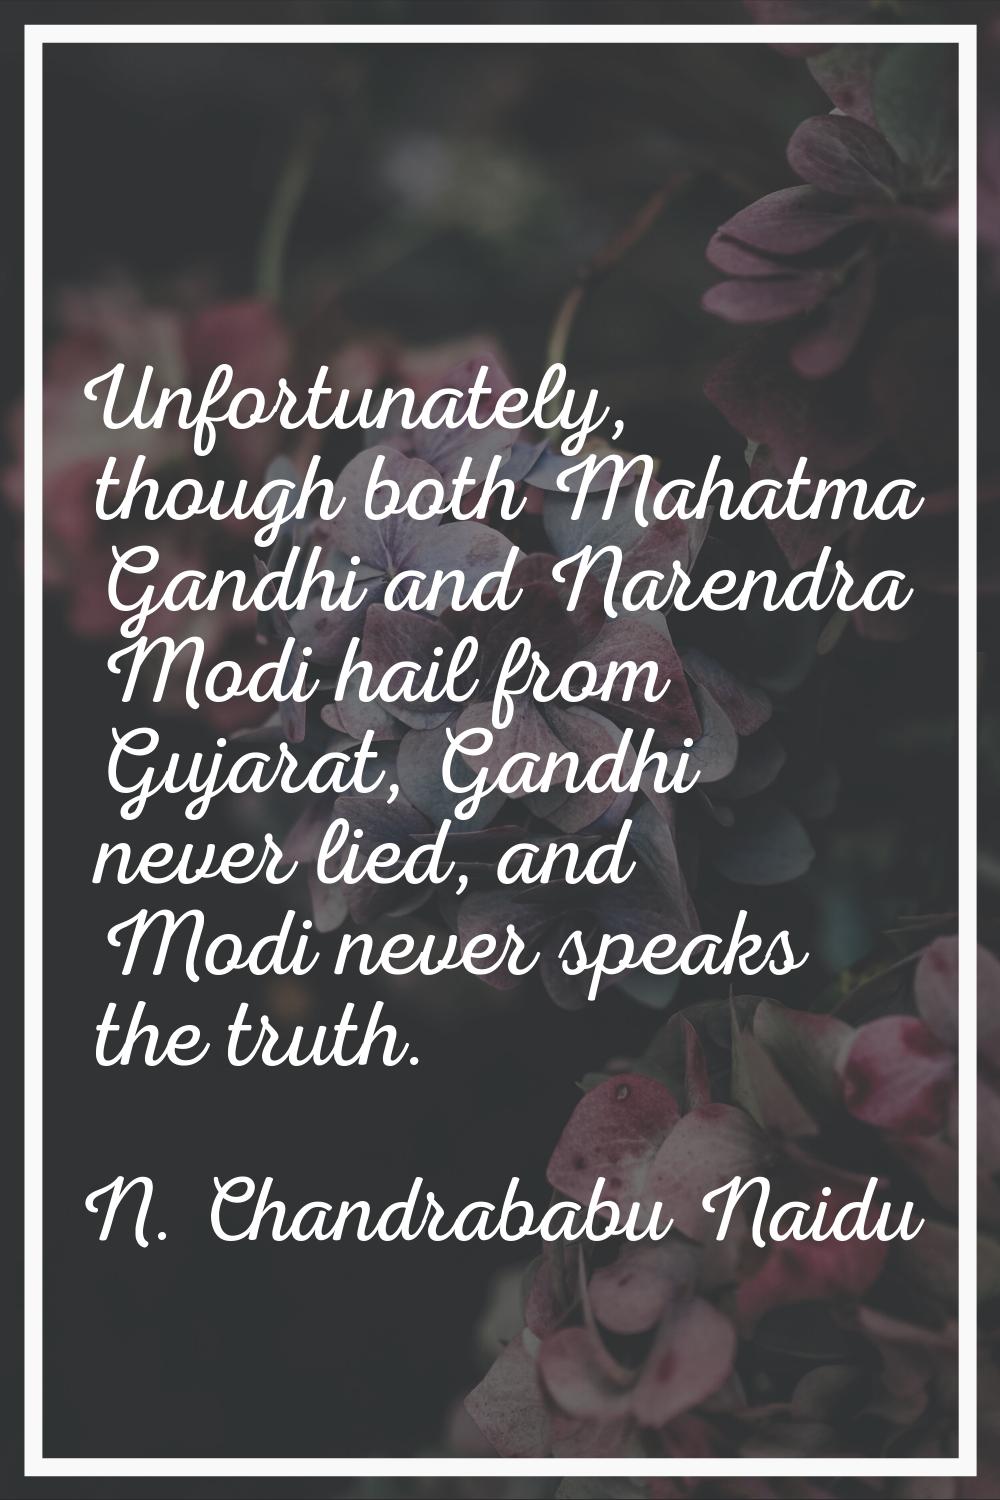 Unfortunately, though both Mahatma Gandhi and Narendra Modi hail from Gujarat, Gandhi never lied, a